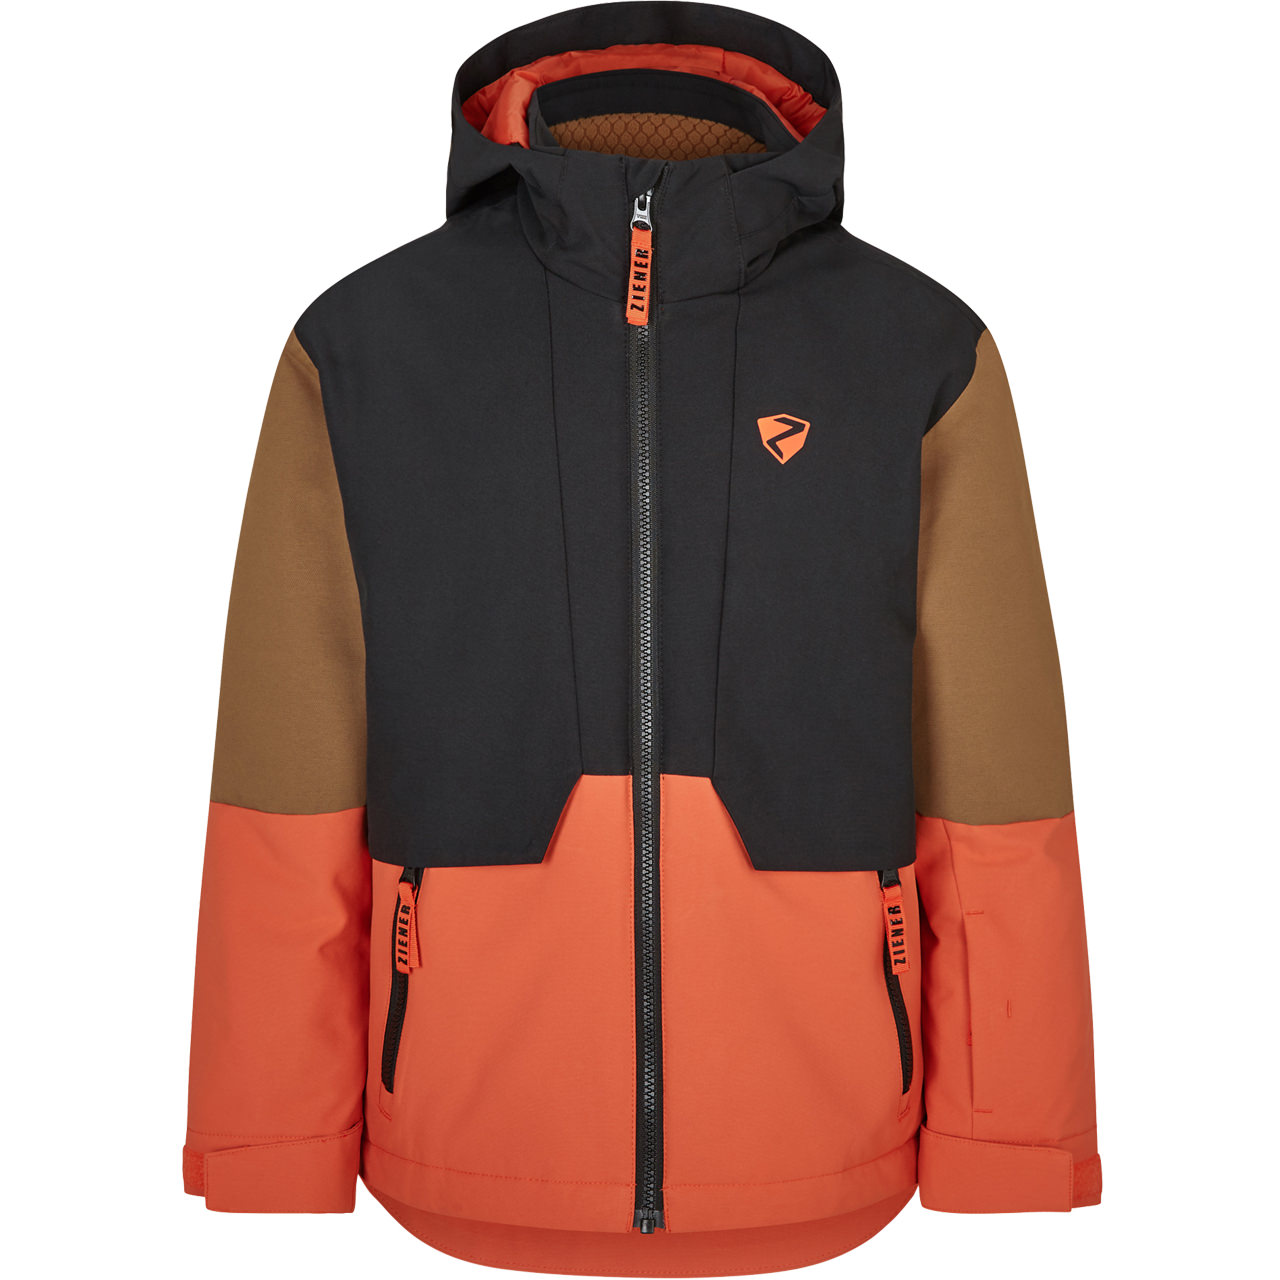 Ziener Boys Ski Jacket orange Alpine | Skiwear | skiwear Skis AZAM burnt |Kids